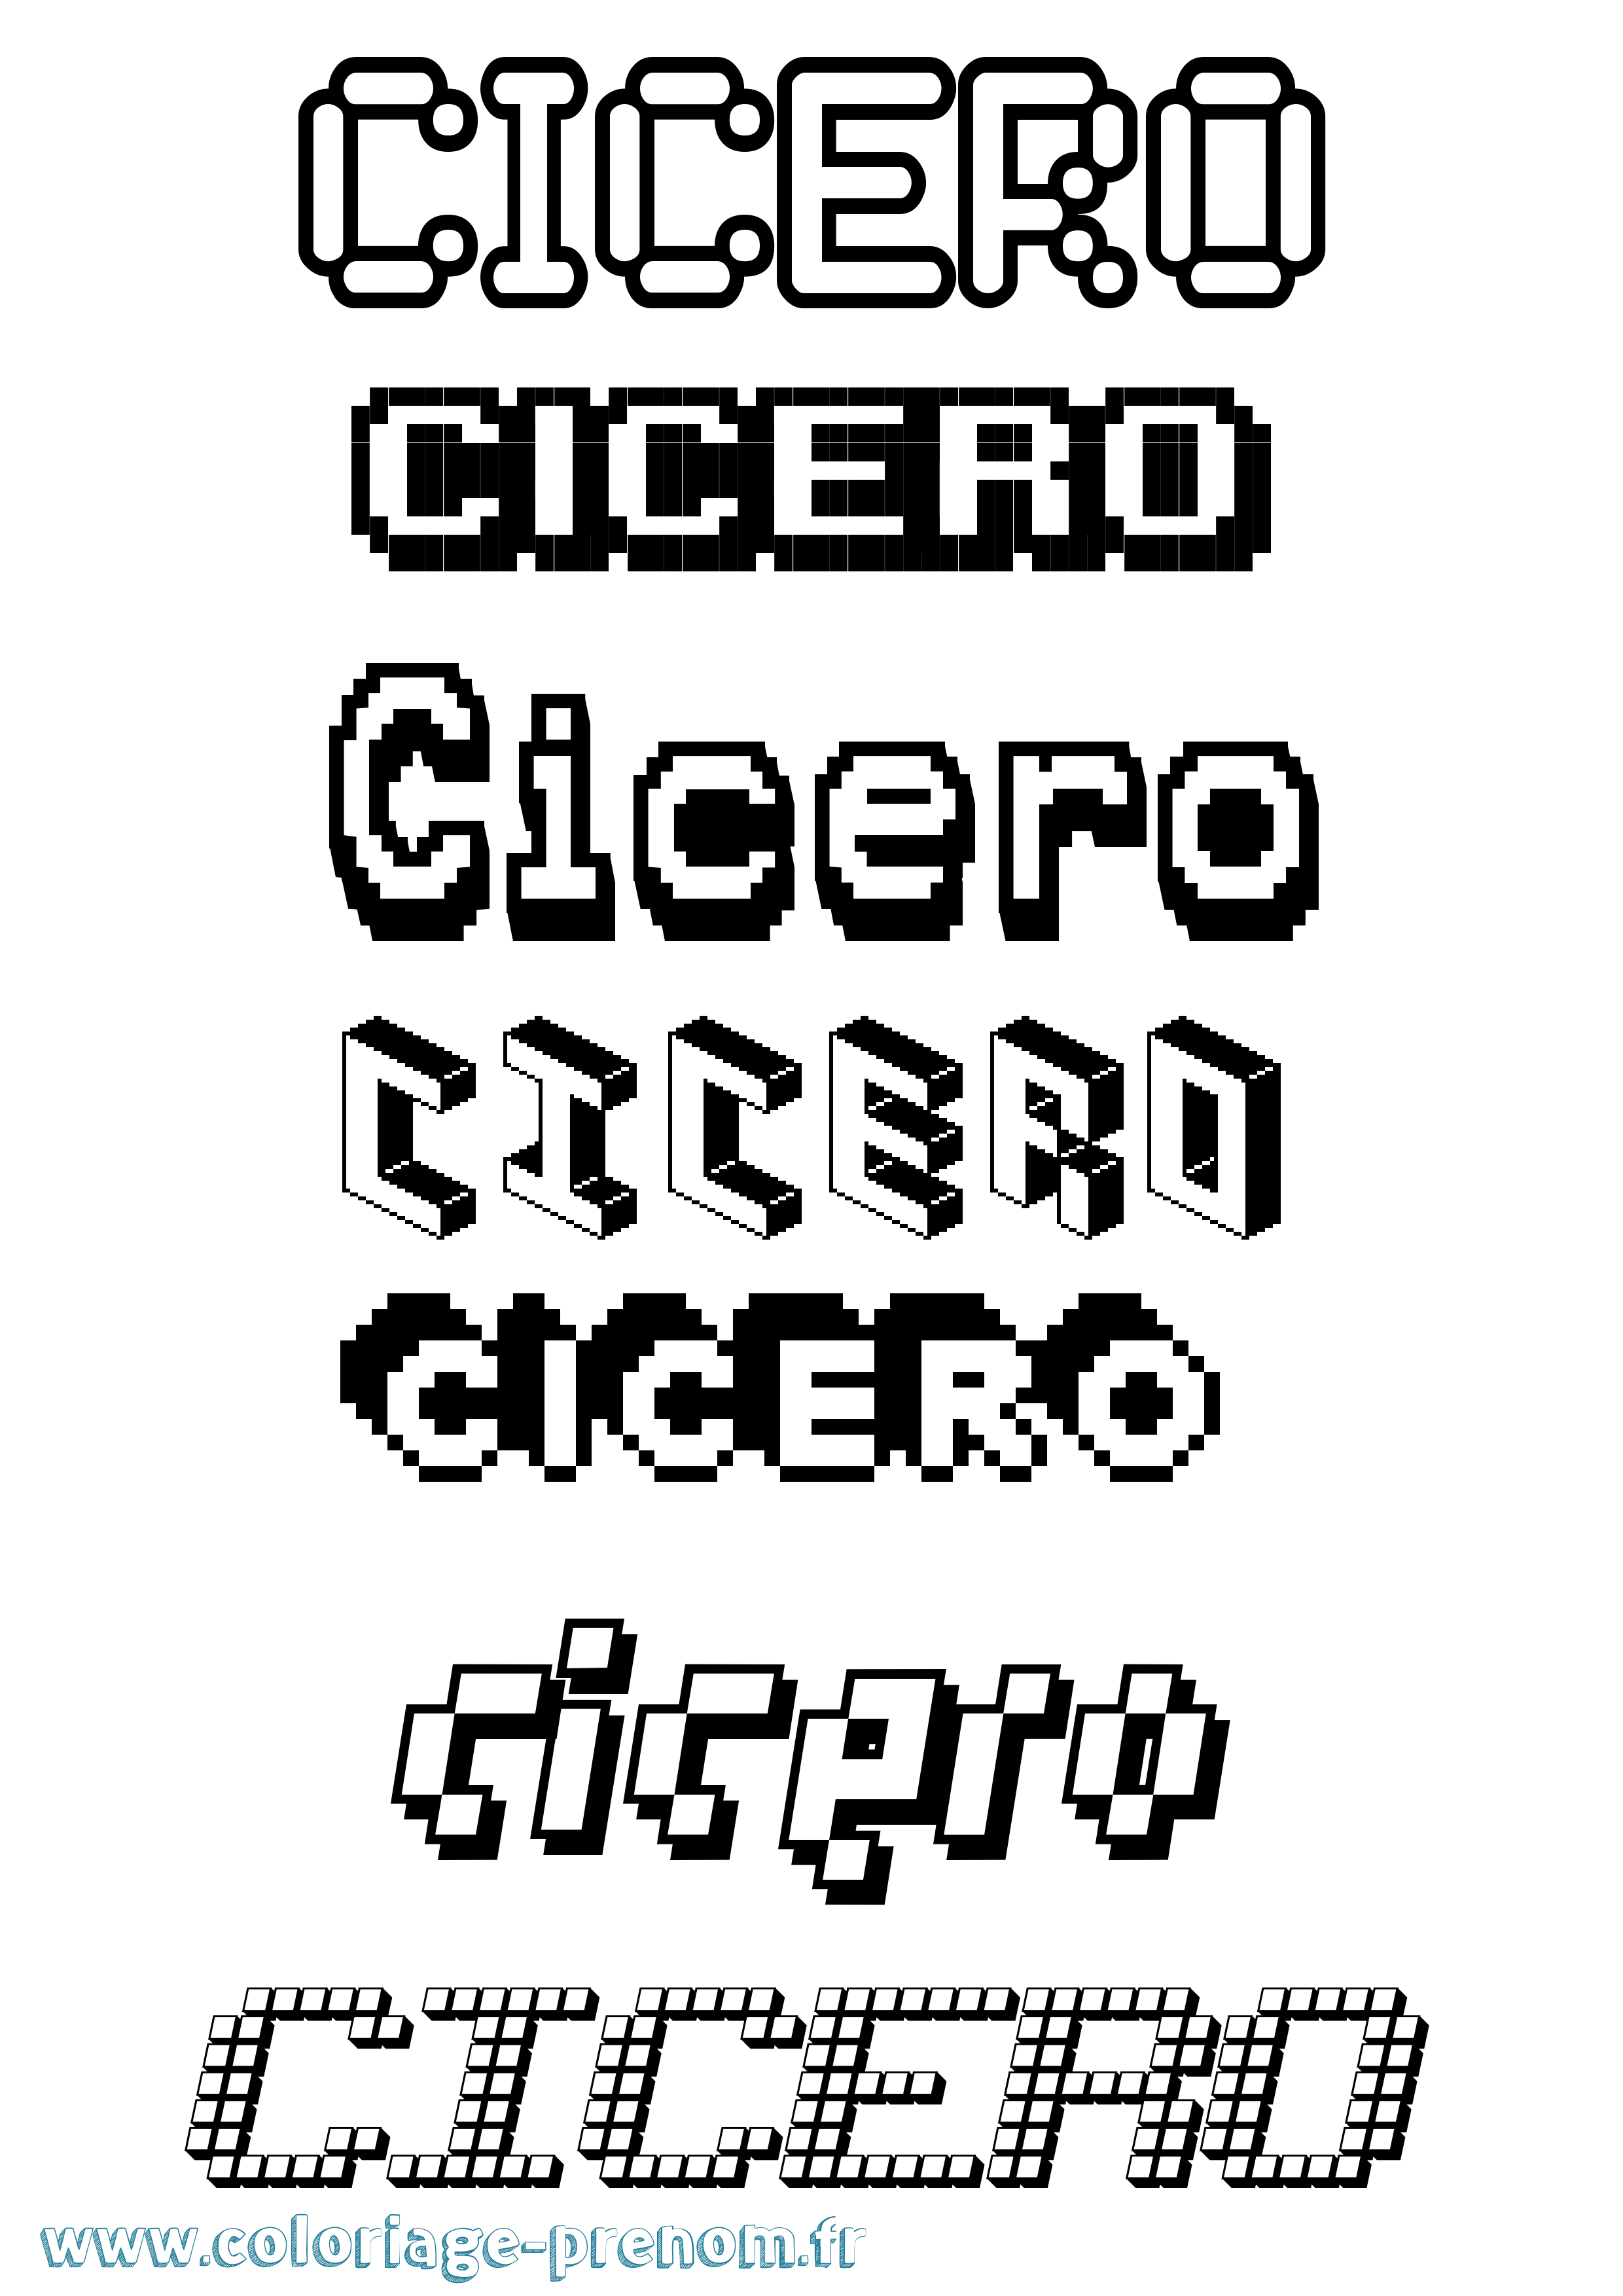 Coloriage prénom Cicero Pixel